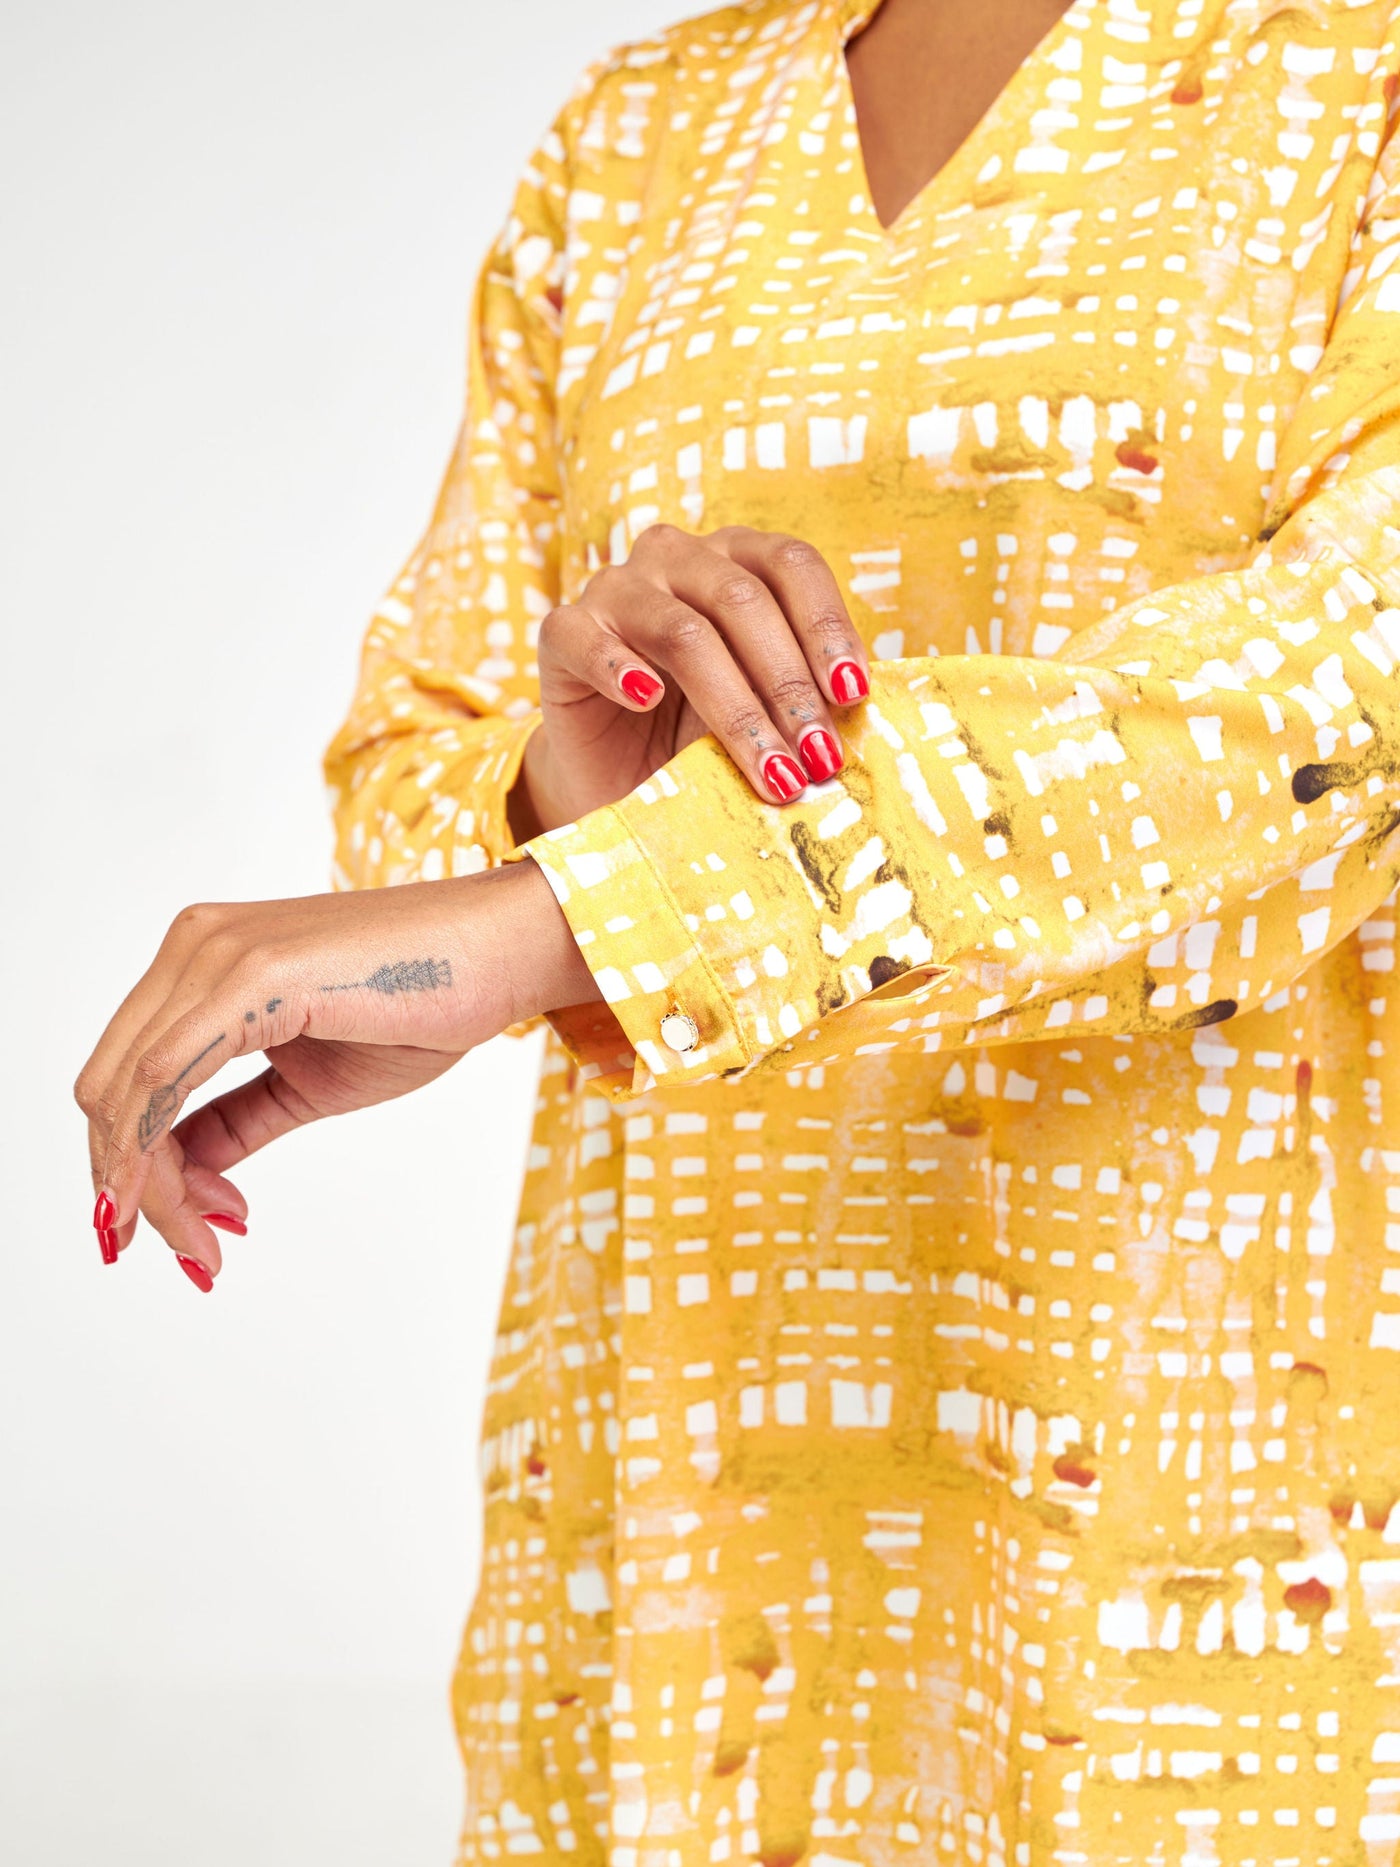 Vivo Ziwa Long Sleeve Ruffled Collar Tunic - Mustard / Off White Zuri Abstract Print